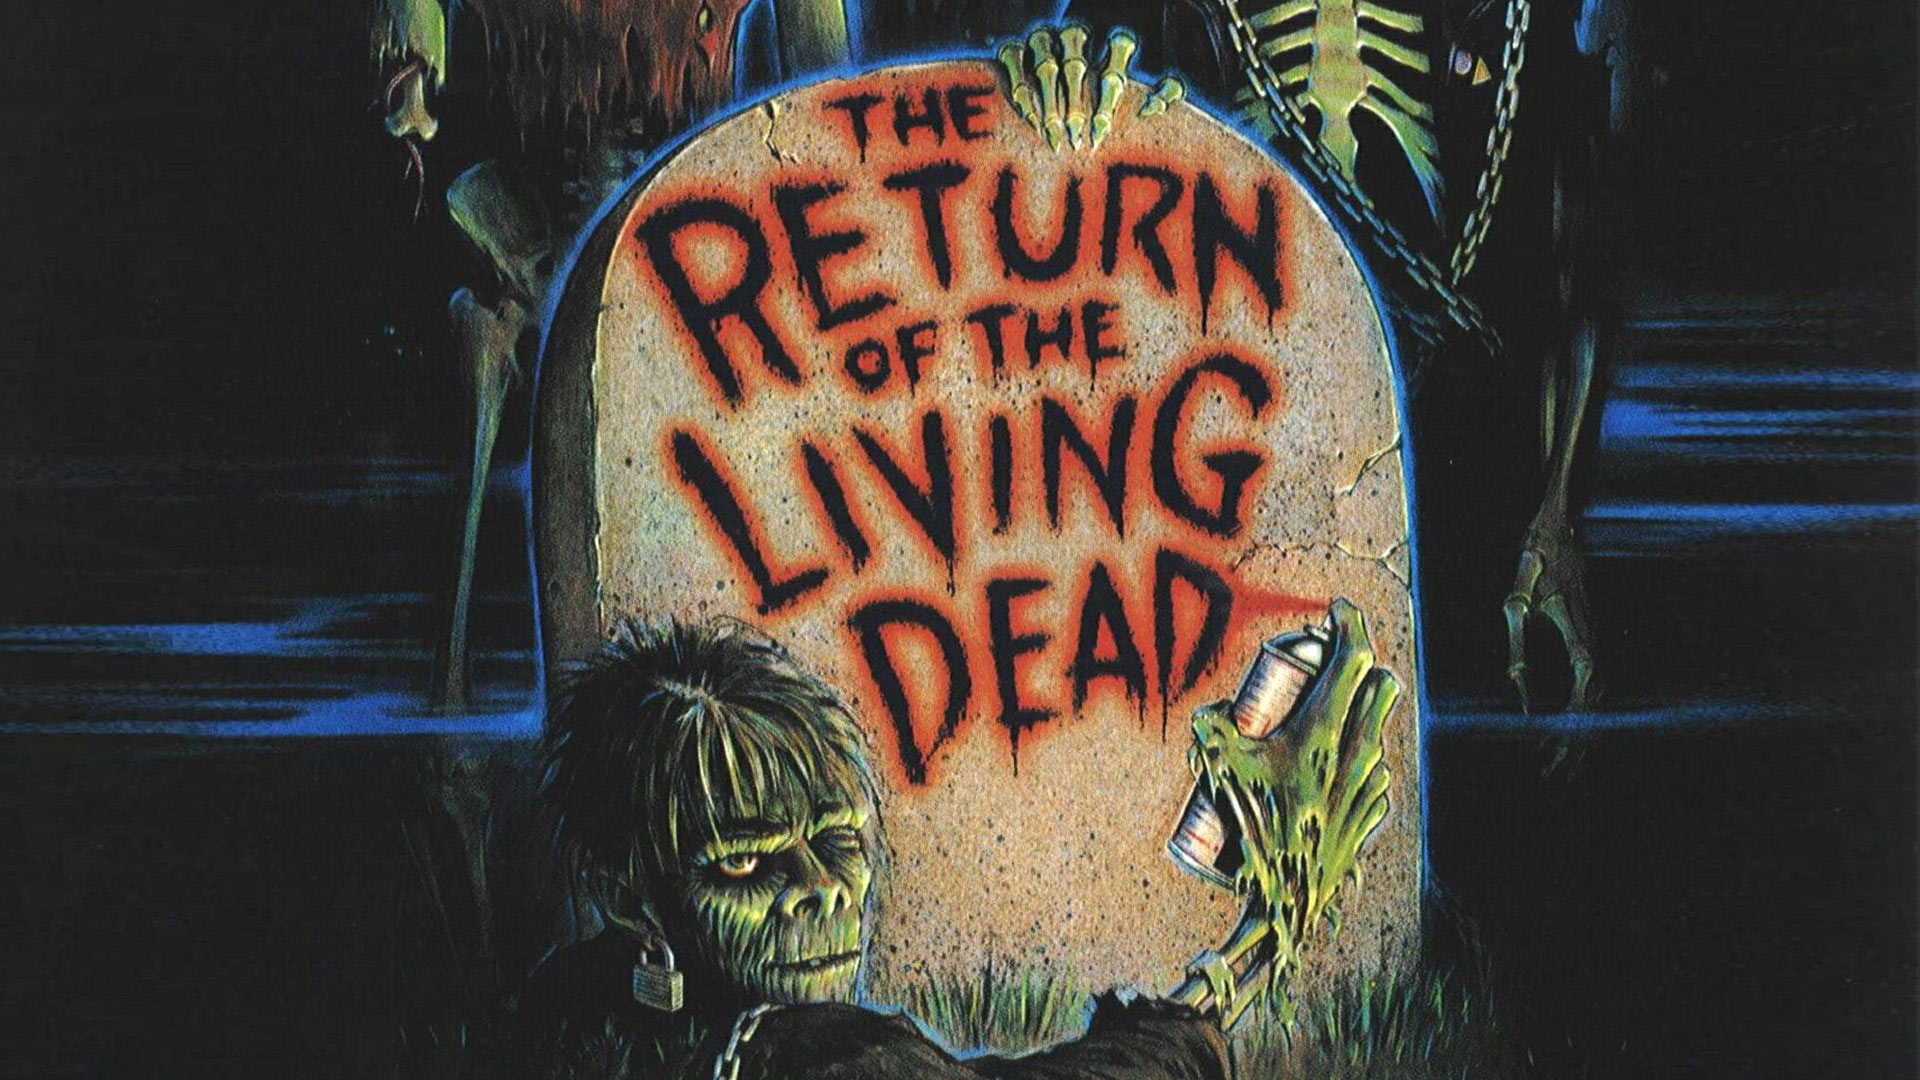 The Return Of The Living Dead